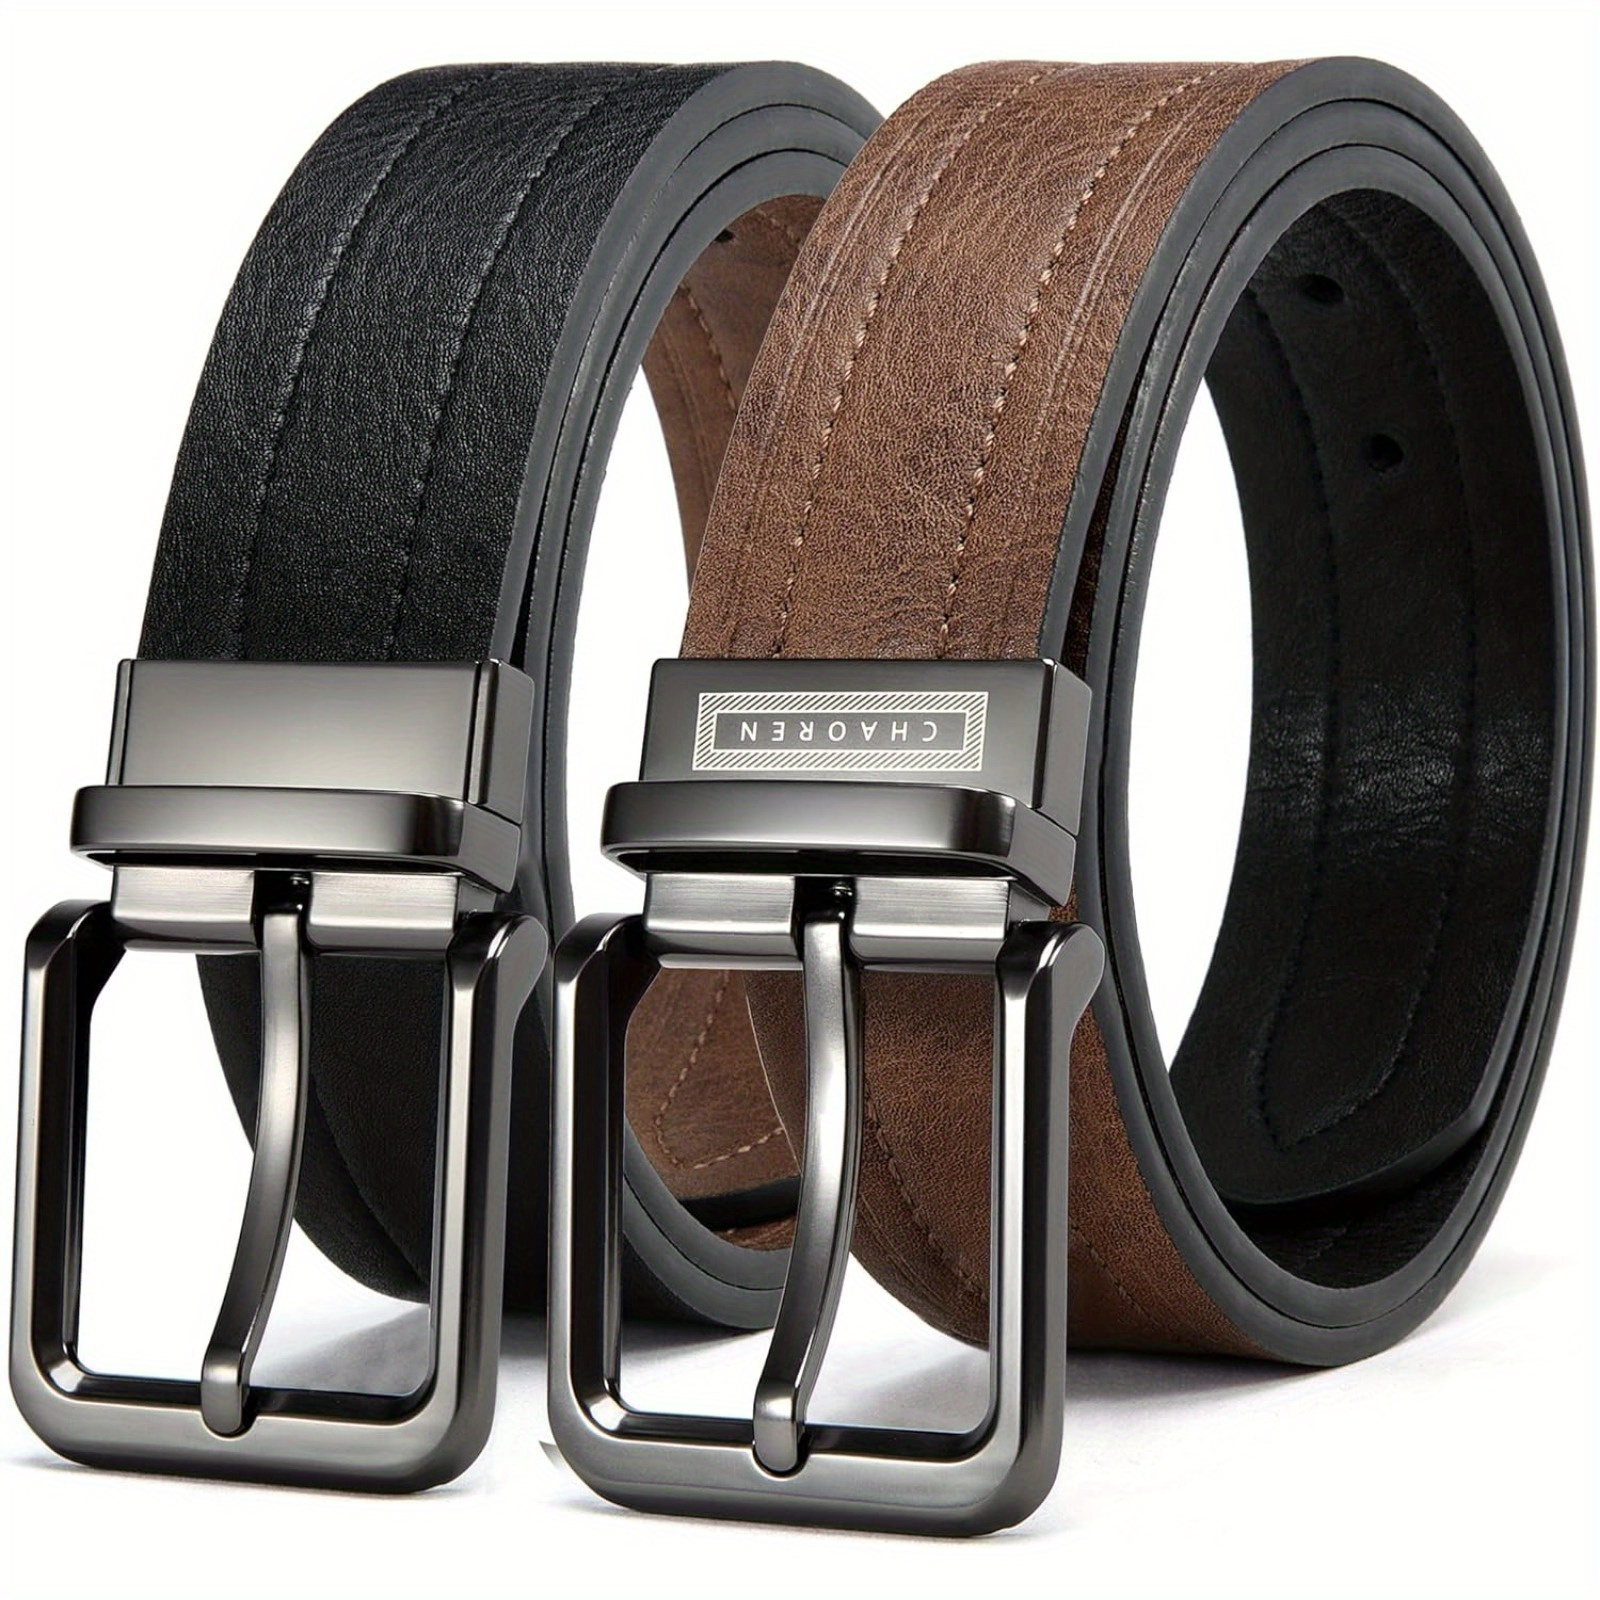 

Chaoren Reversible Men Belt - 1 1/2" Mens Belt Leather For Dress Pants Jeans - 2 Styles In 1 Belt